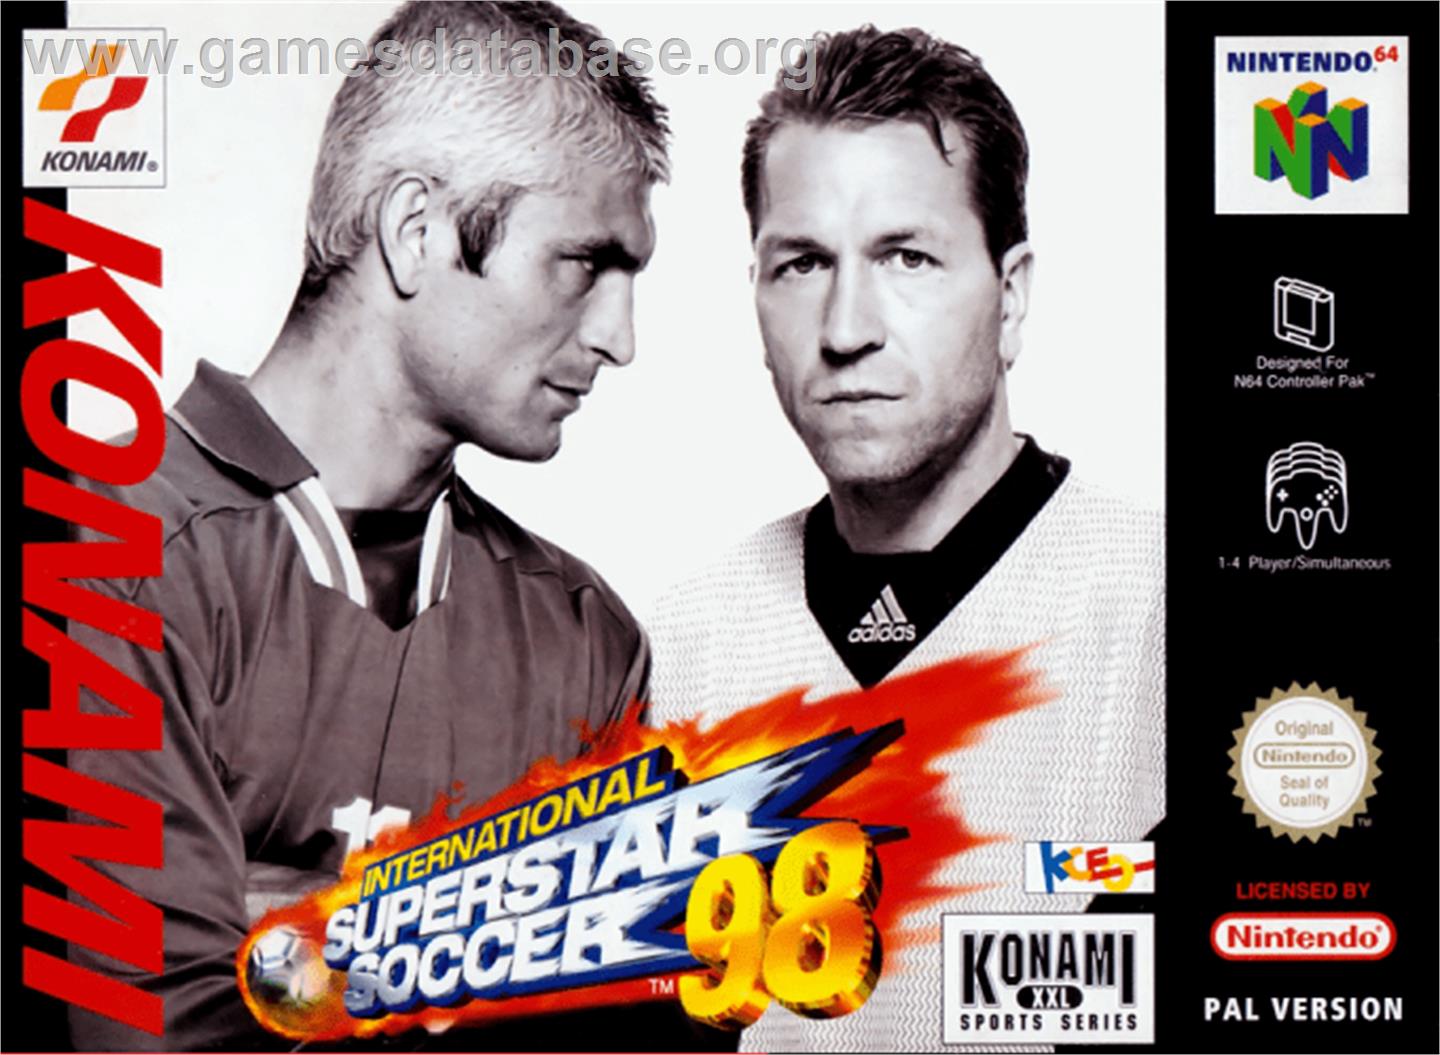 International Superstar Soccer '98 - Nintendo N64 - Artwork - Box